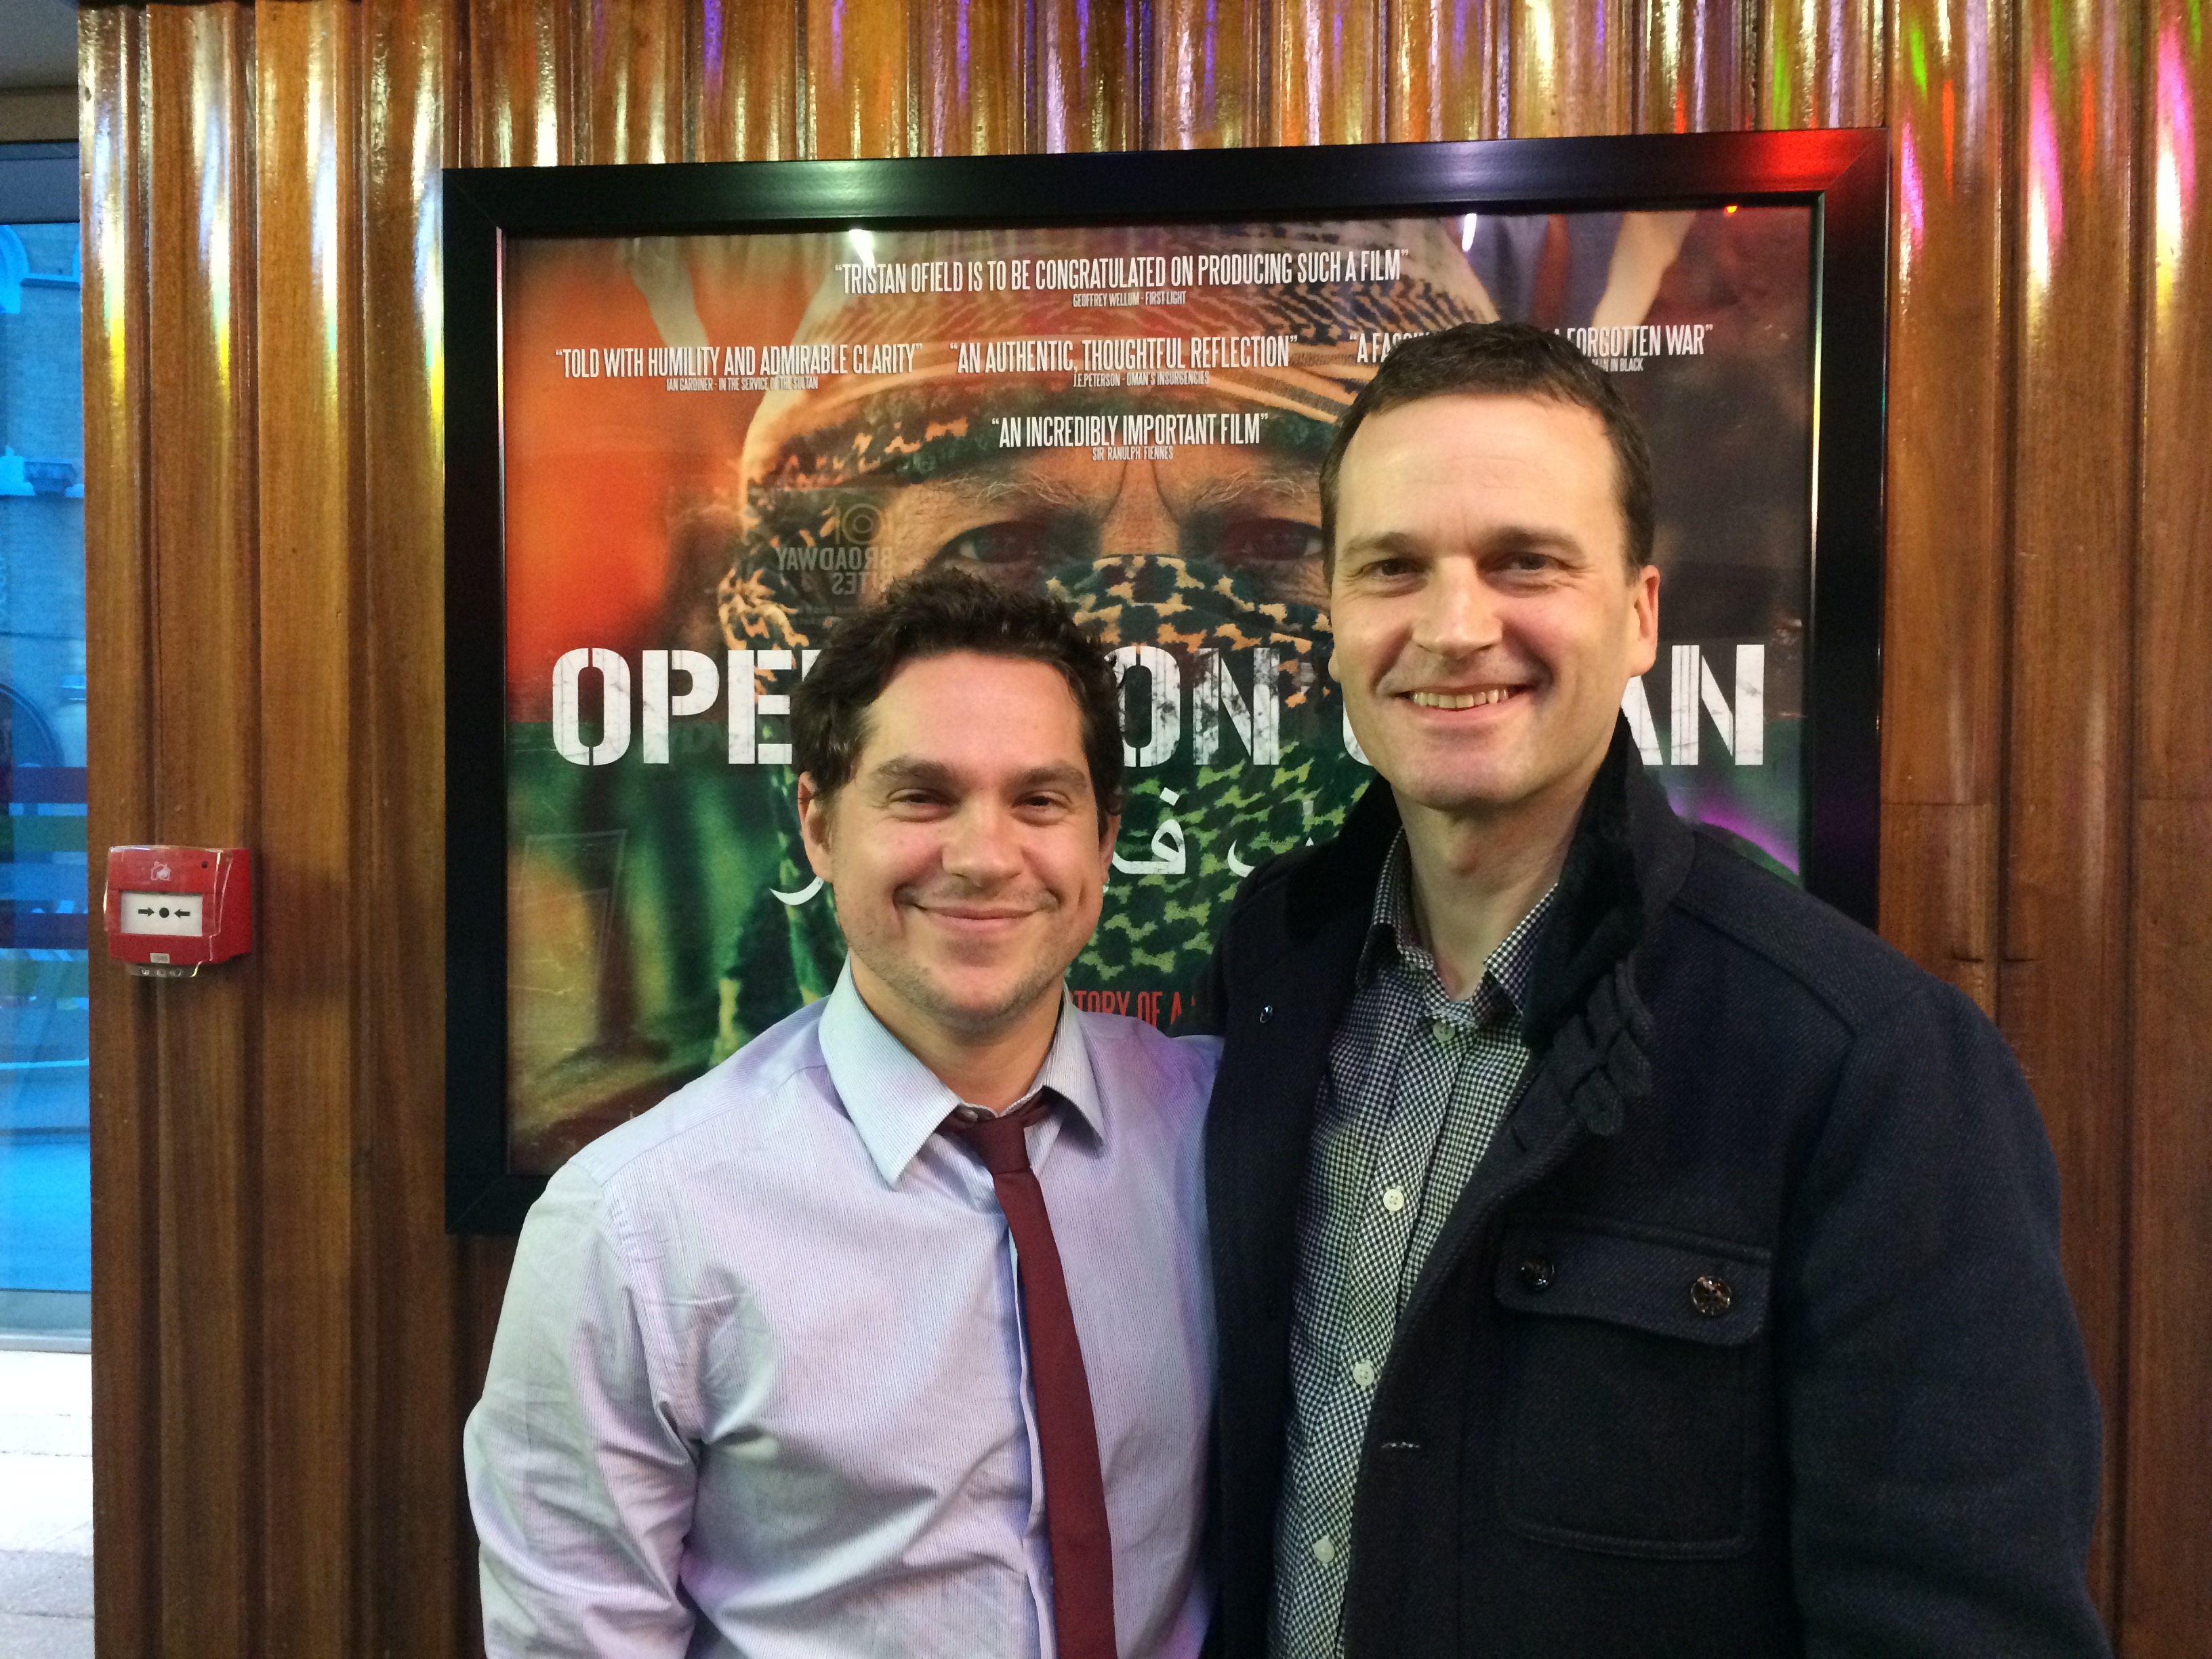 'Operation Oman' - Film Premiere; with director Tristan Ofield